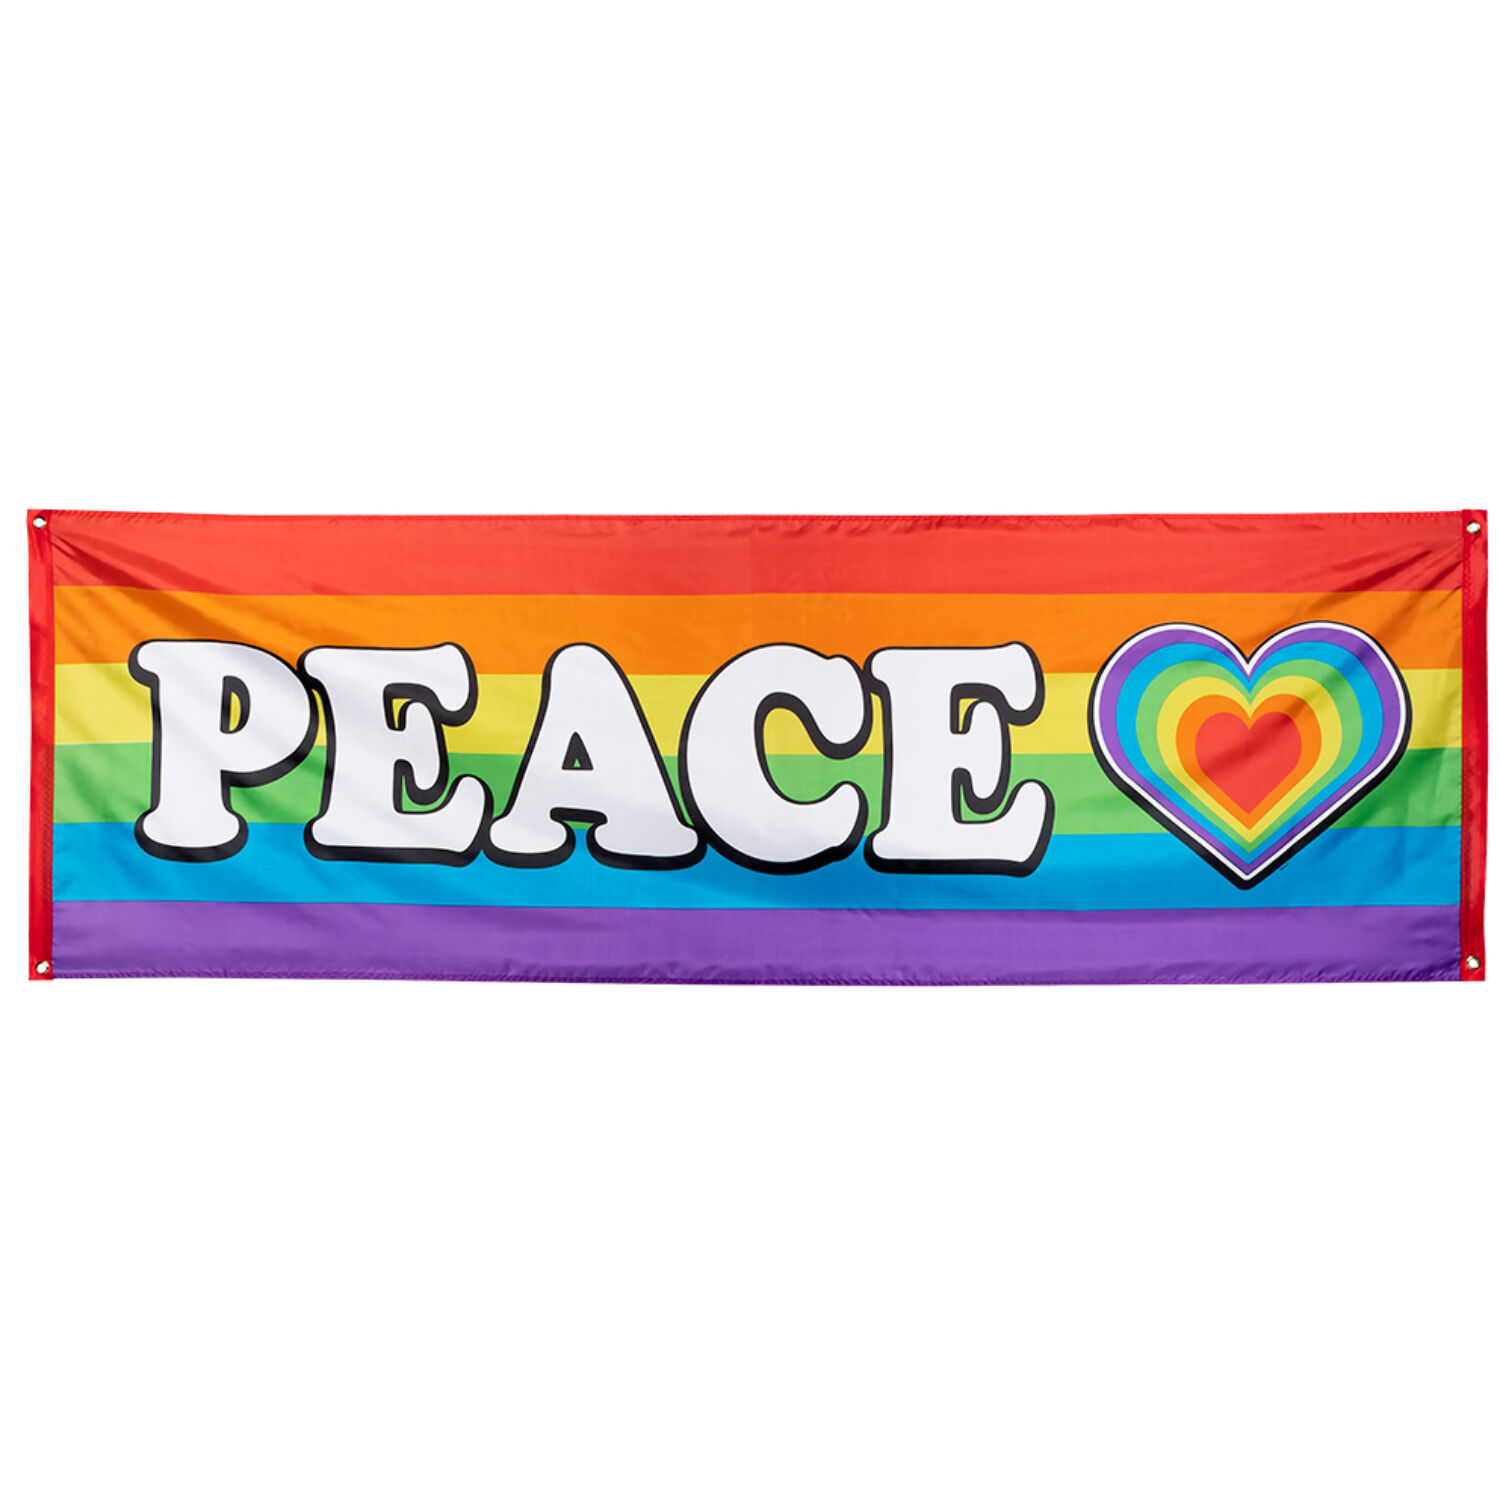 NEU Fahne Regenbogen Peace, 74x220cm